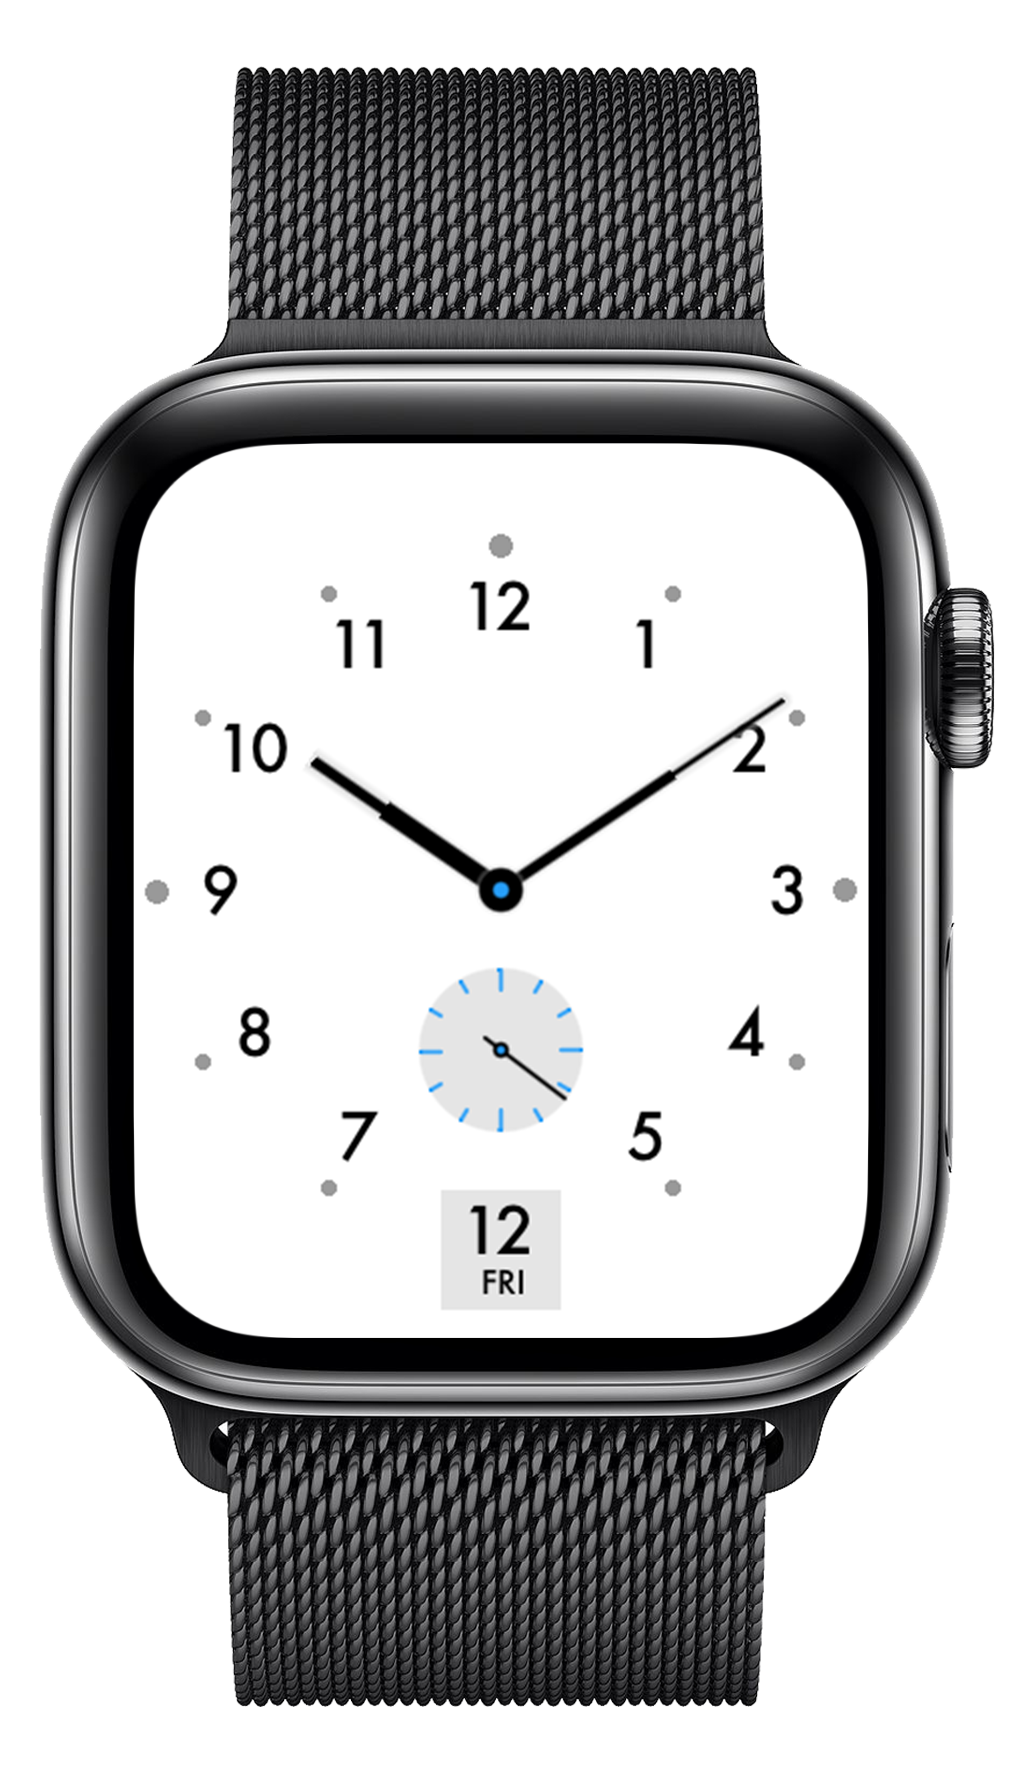 Exploring Custom watchOS Watch Faces - David Smith, Independent iOS ...